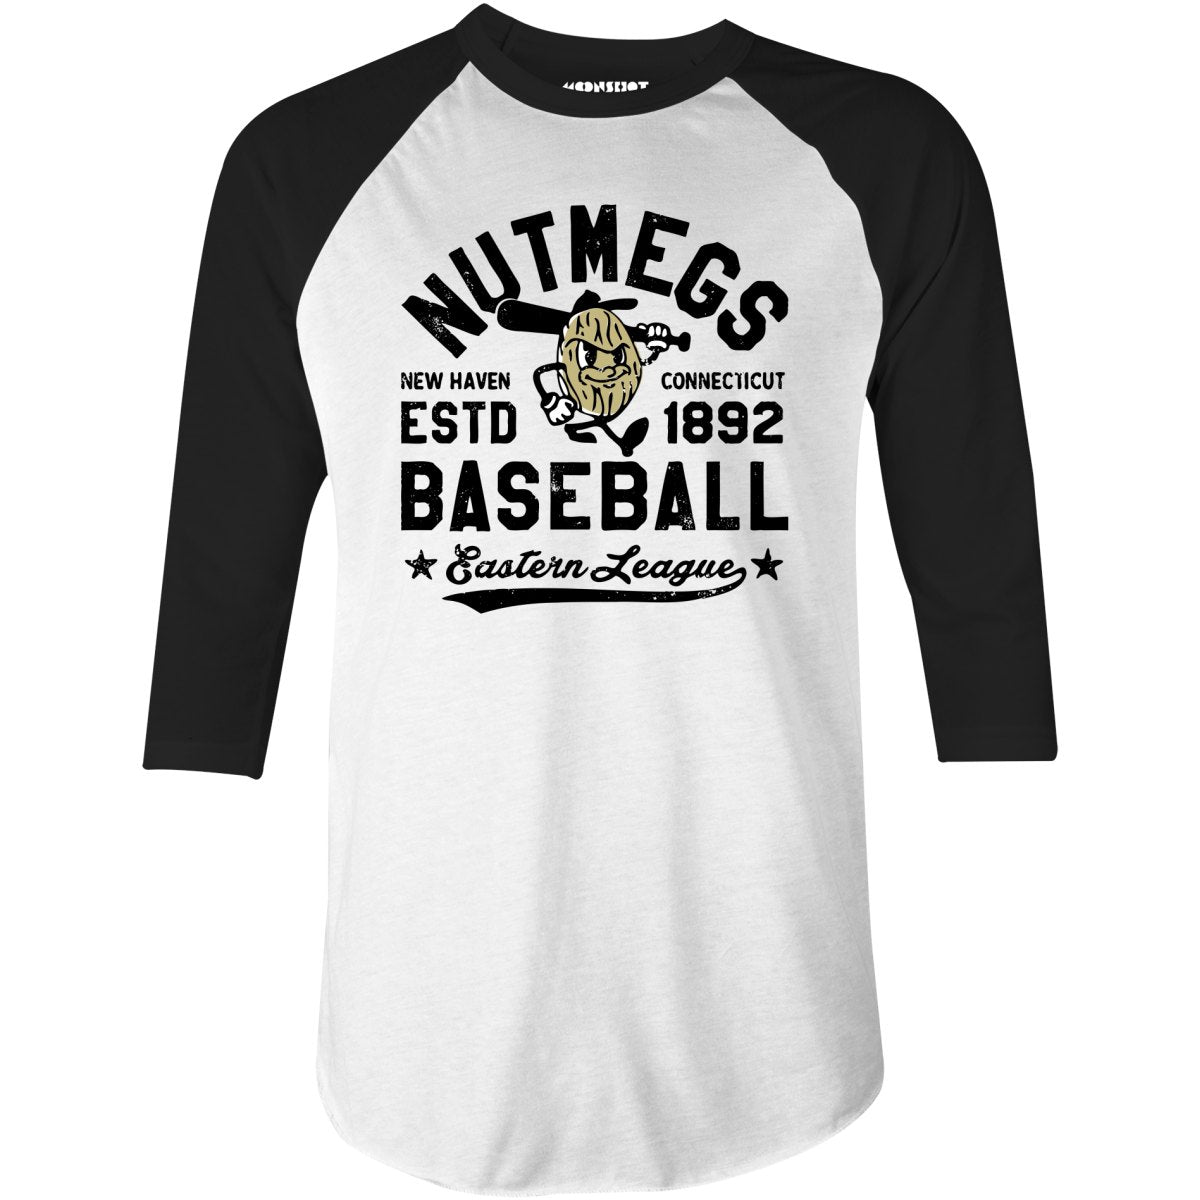 New Haven Nutmegs - Connecticut - Vintage Defunct Baseball Teams - 3/4 Sleeve Raglan T-Shirt